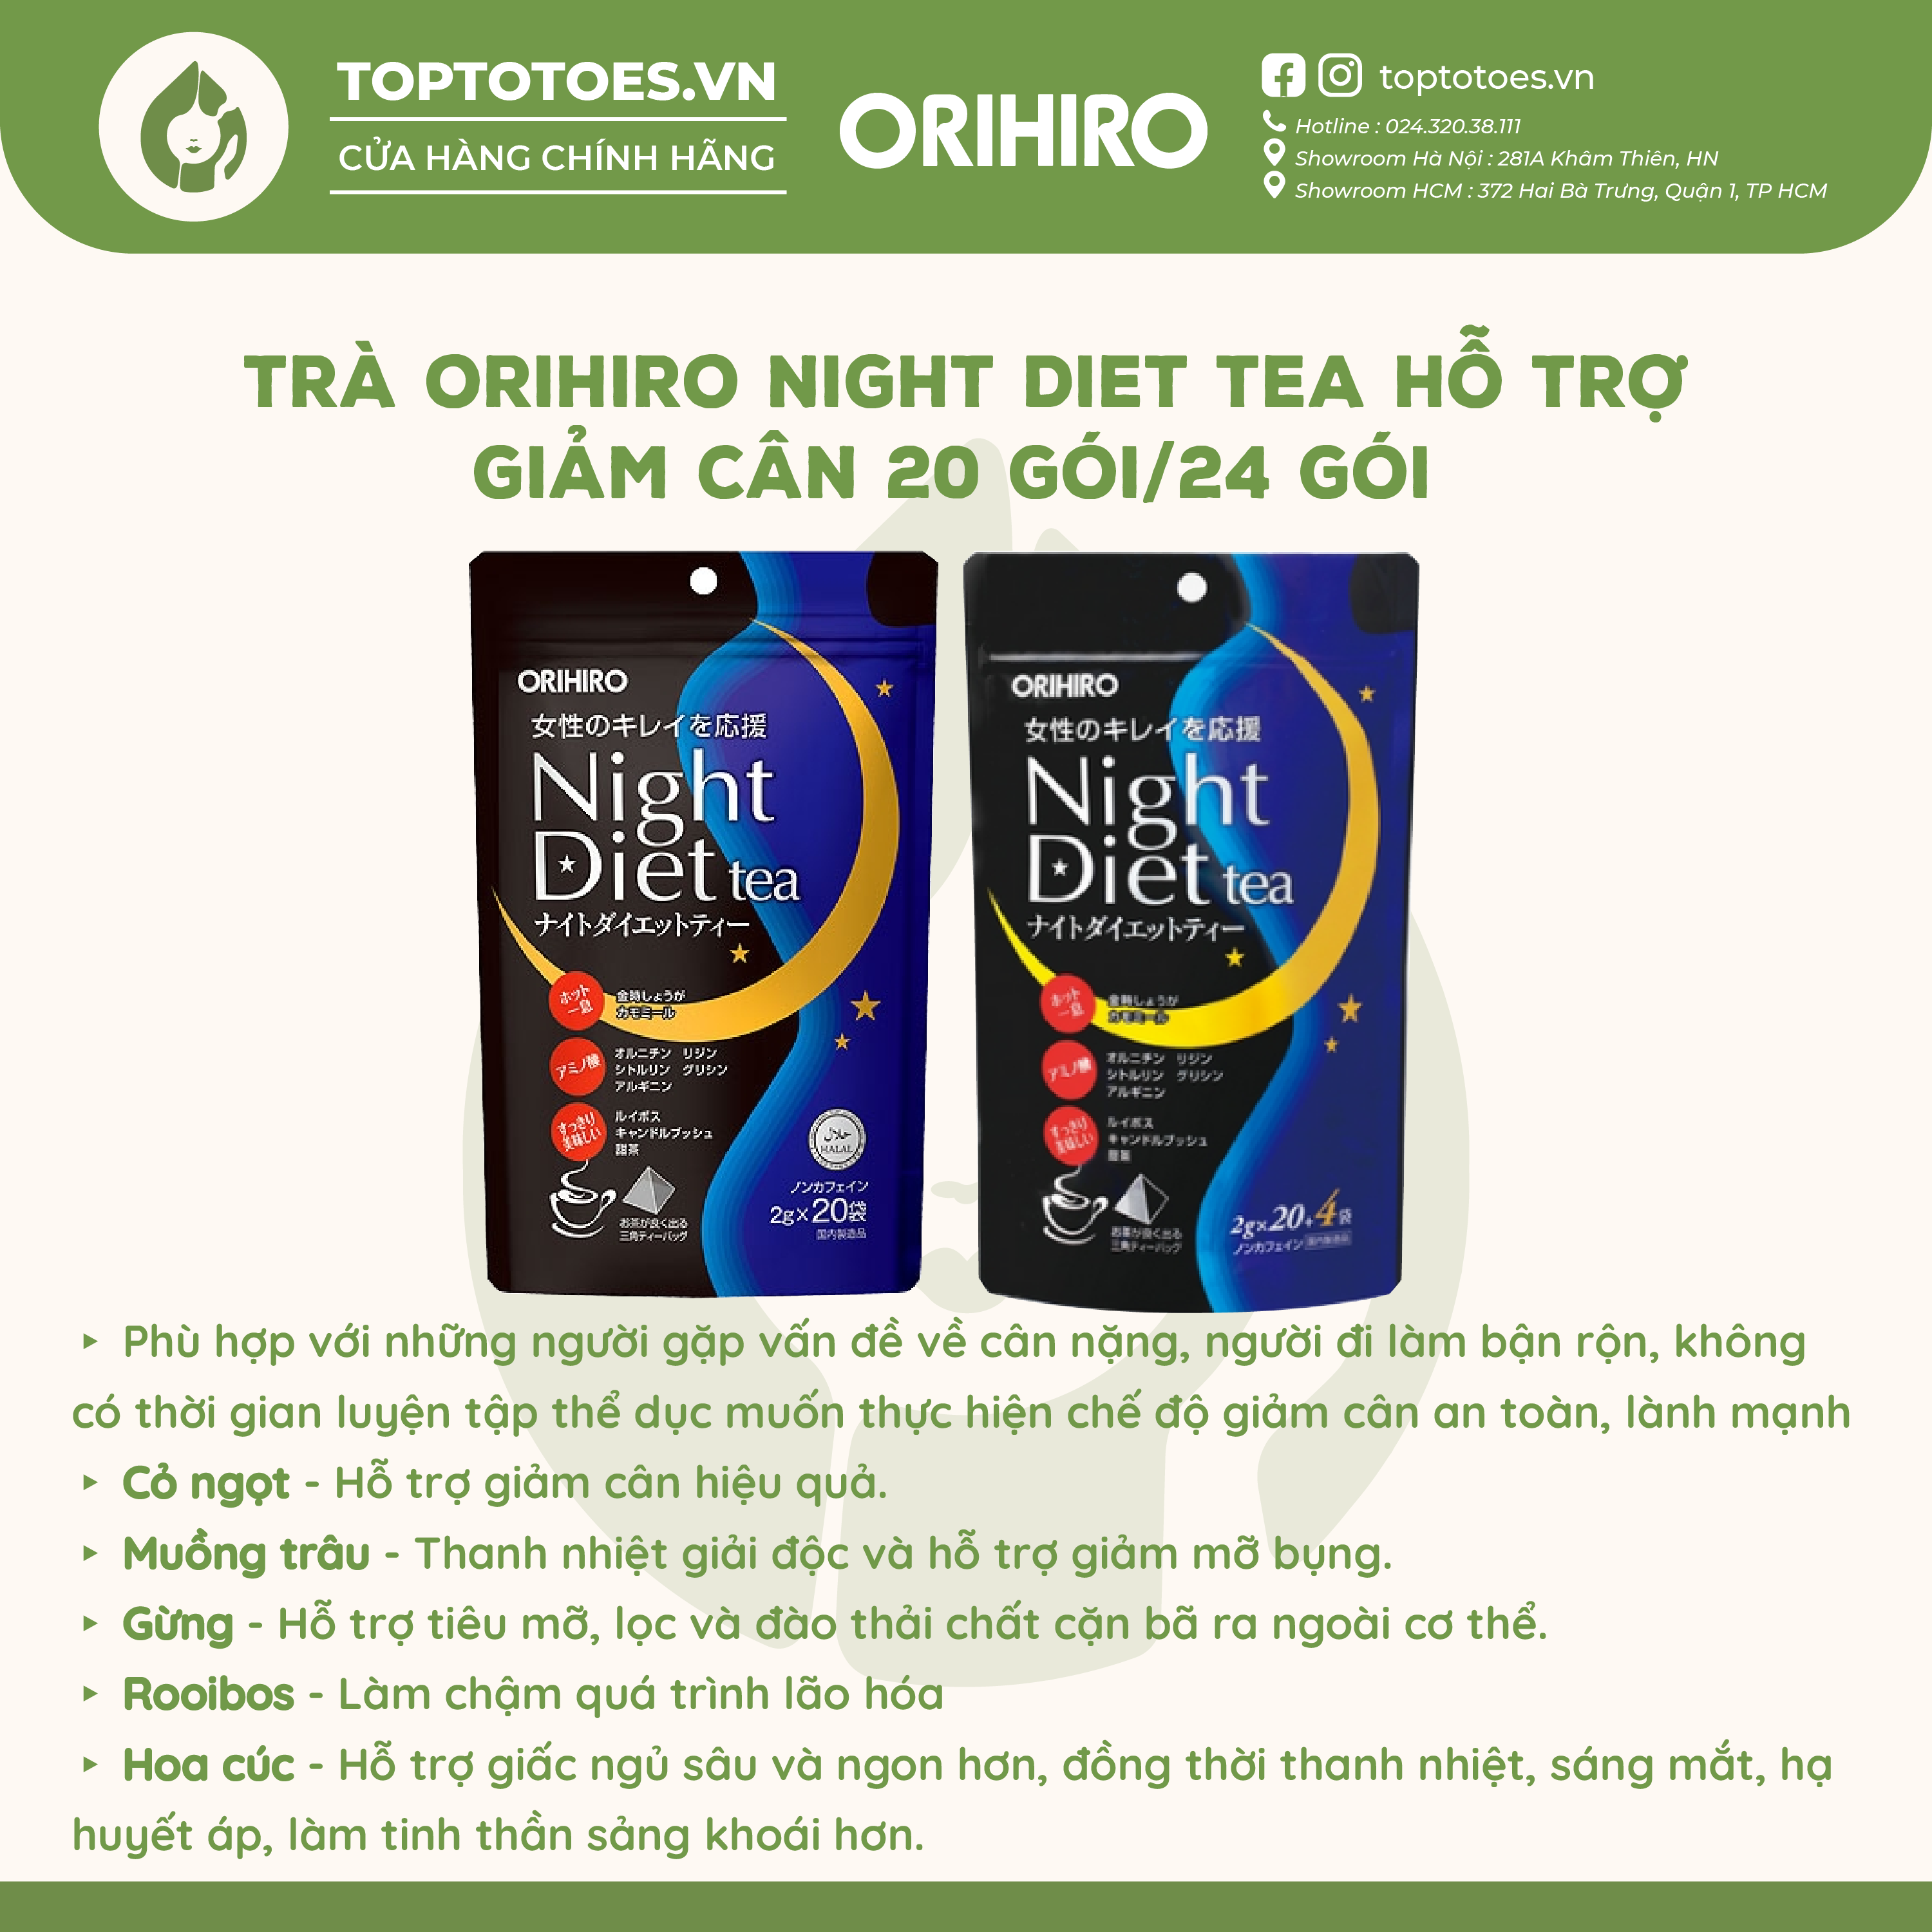 Trà Orihiro Night Diet Tea hỗ trợ giảm cân an toàn 20 gói 24 gói